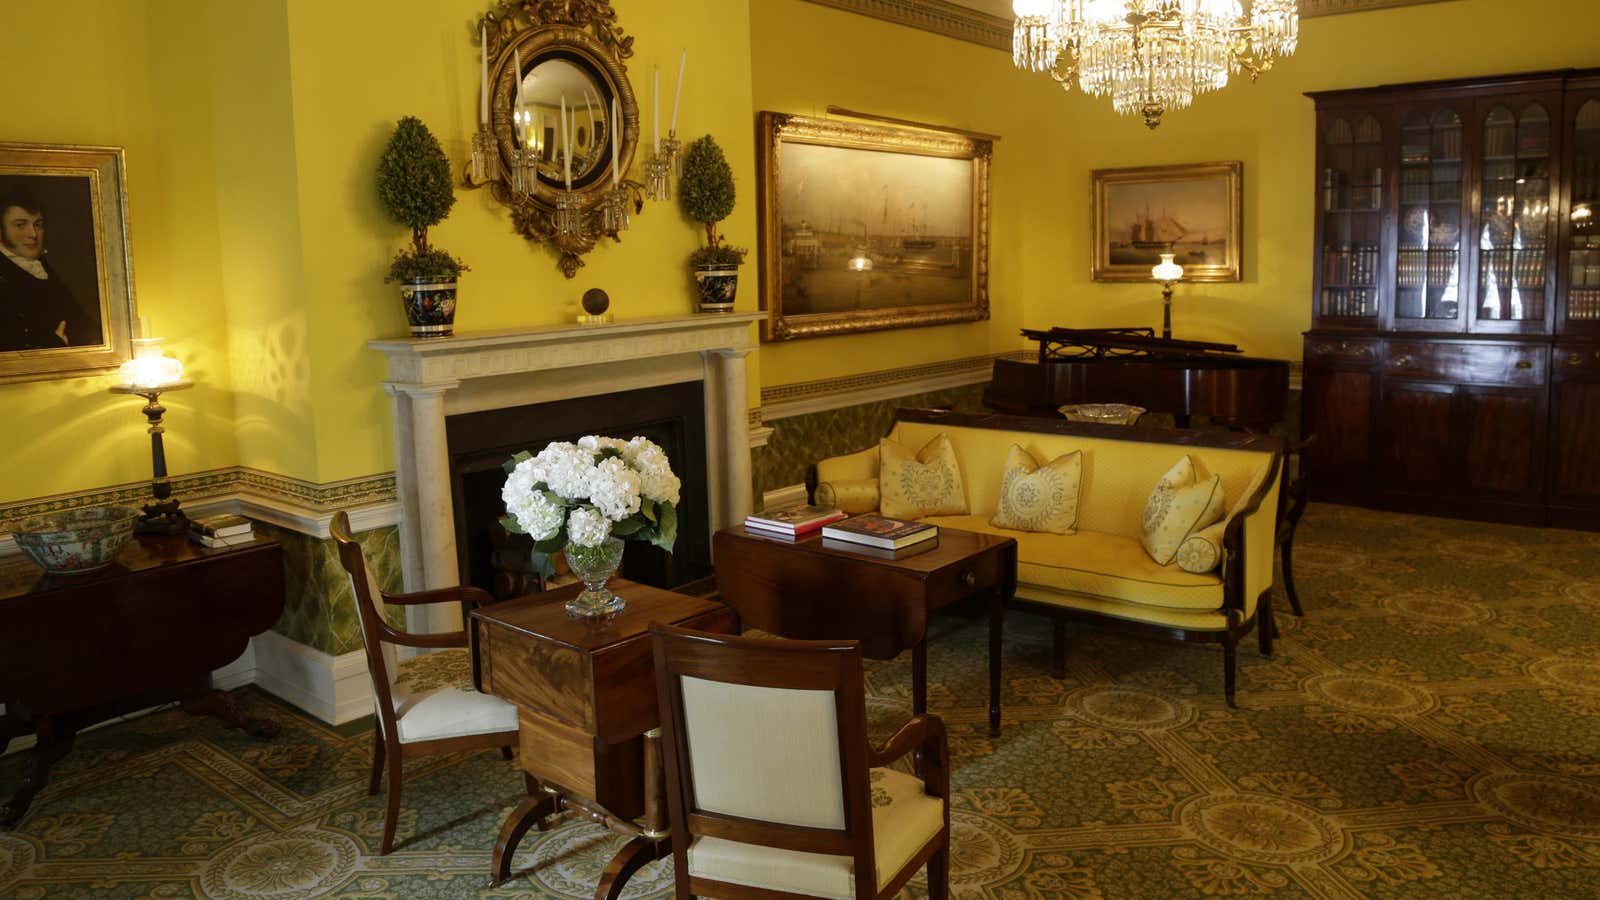 New York City mayor Bill de Blasio will be enjoying the parlor at Gracie Mansion.